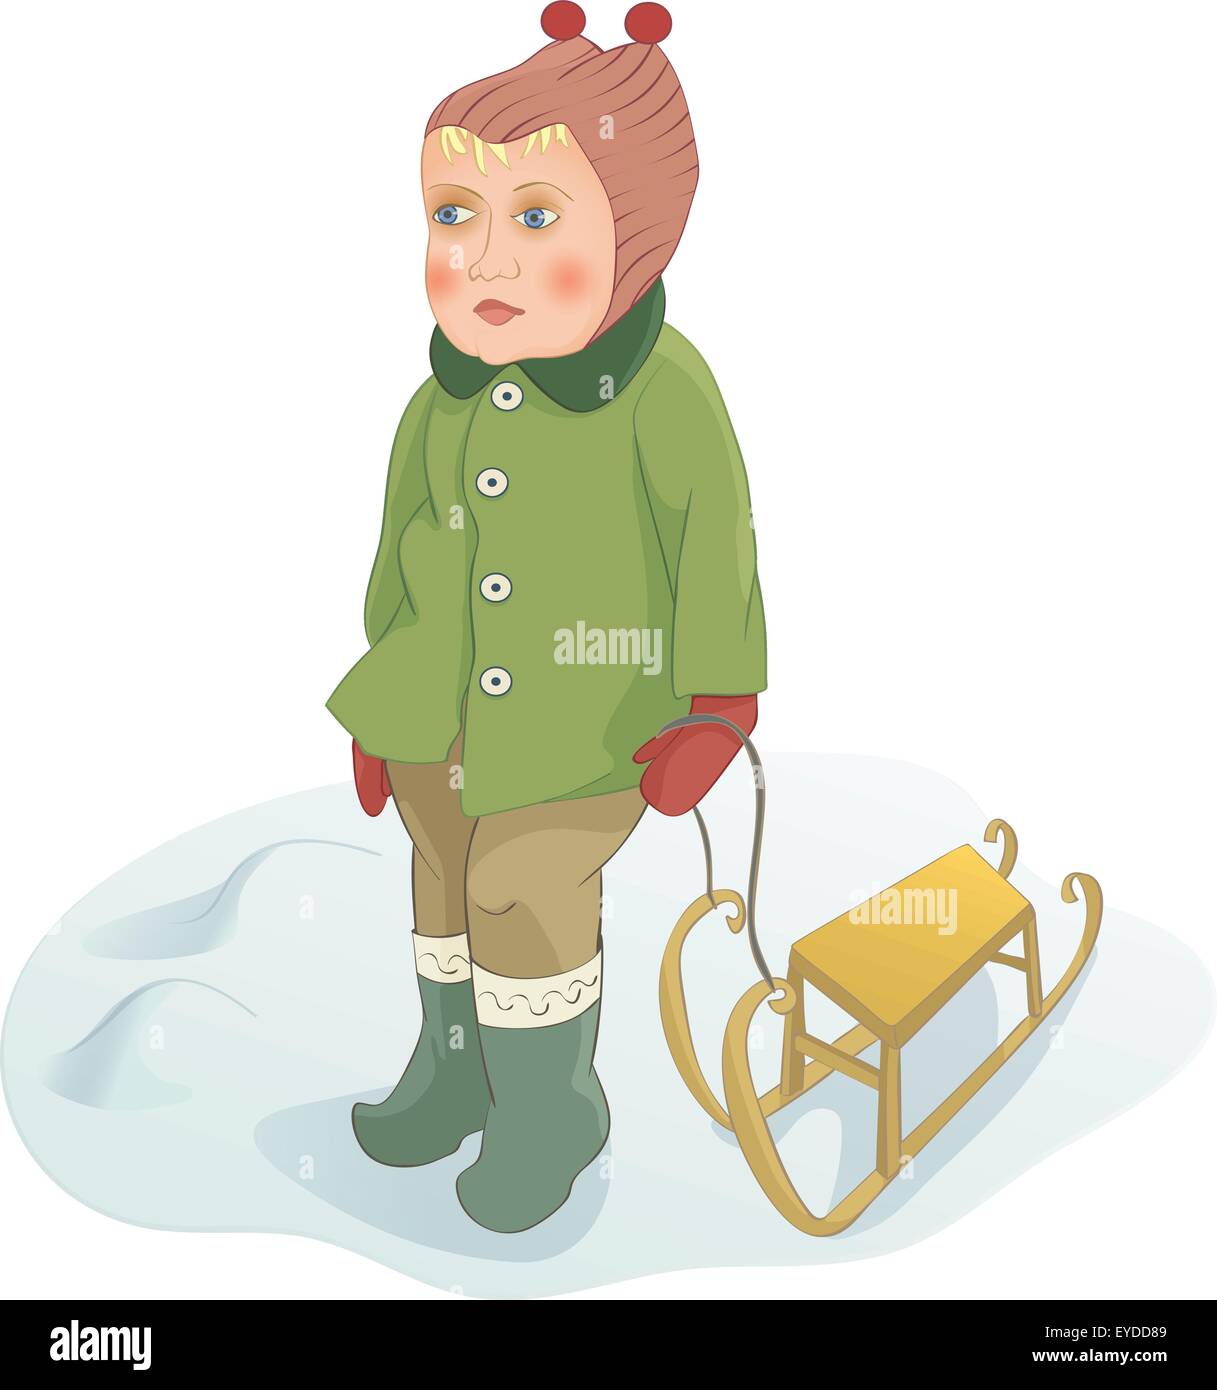 niño en la nieve con trineo Stock Illustration